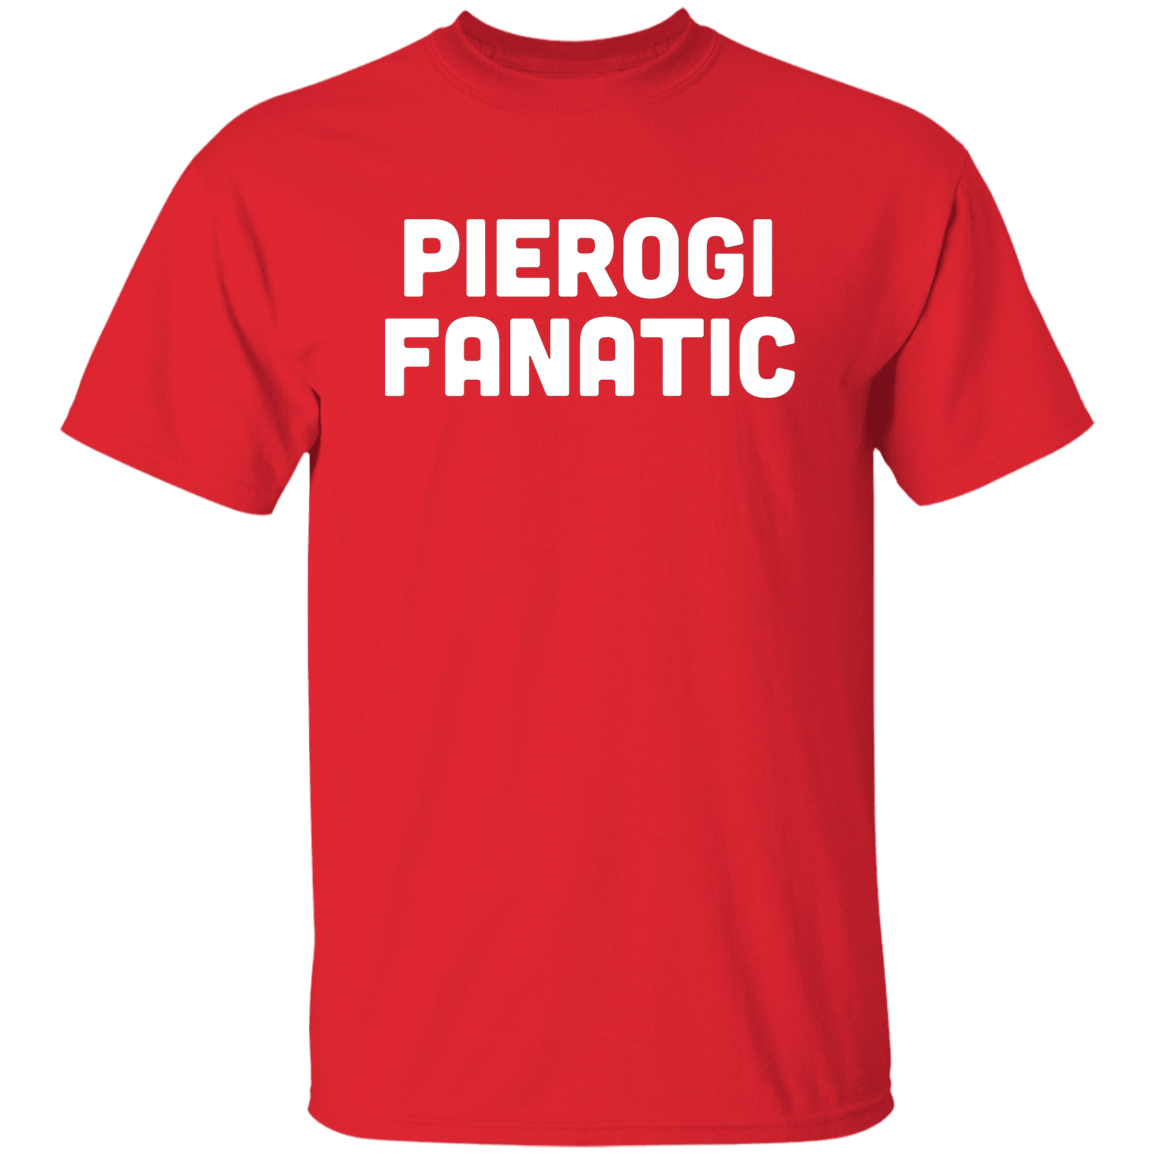 Pierogi Fanatic Apparel CustomCat G500 5.3 oz. T-Shirt Red S